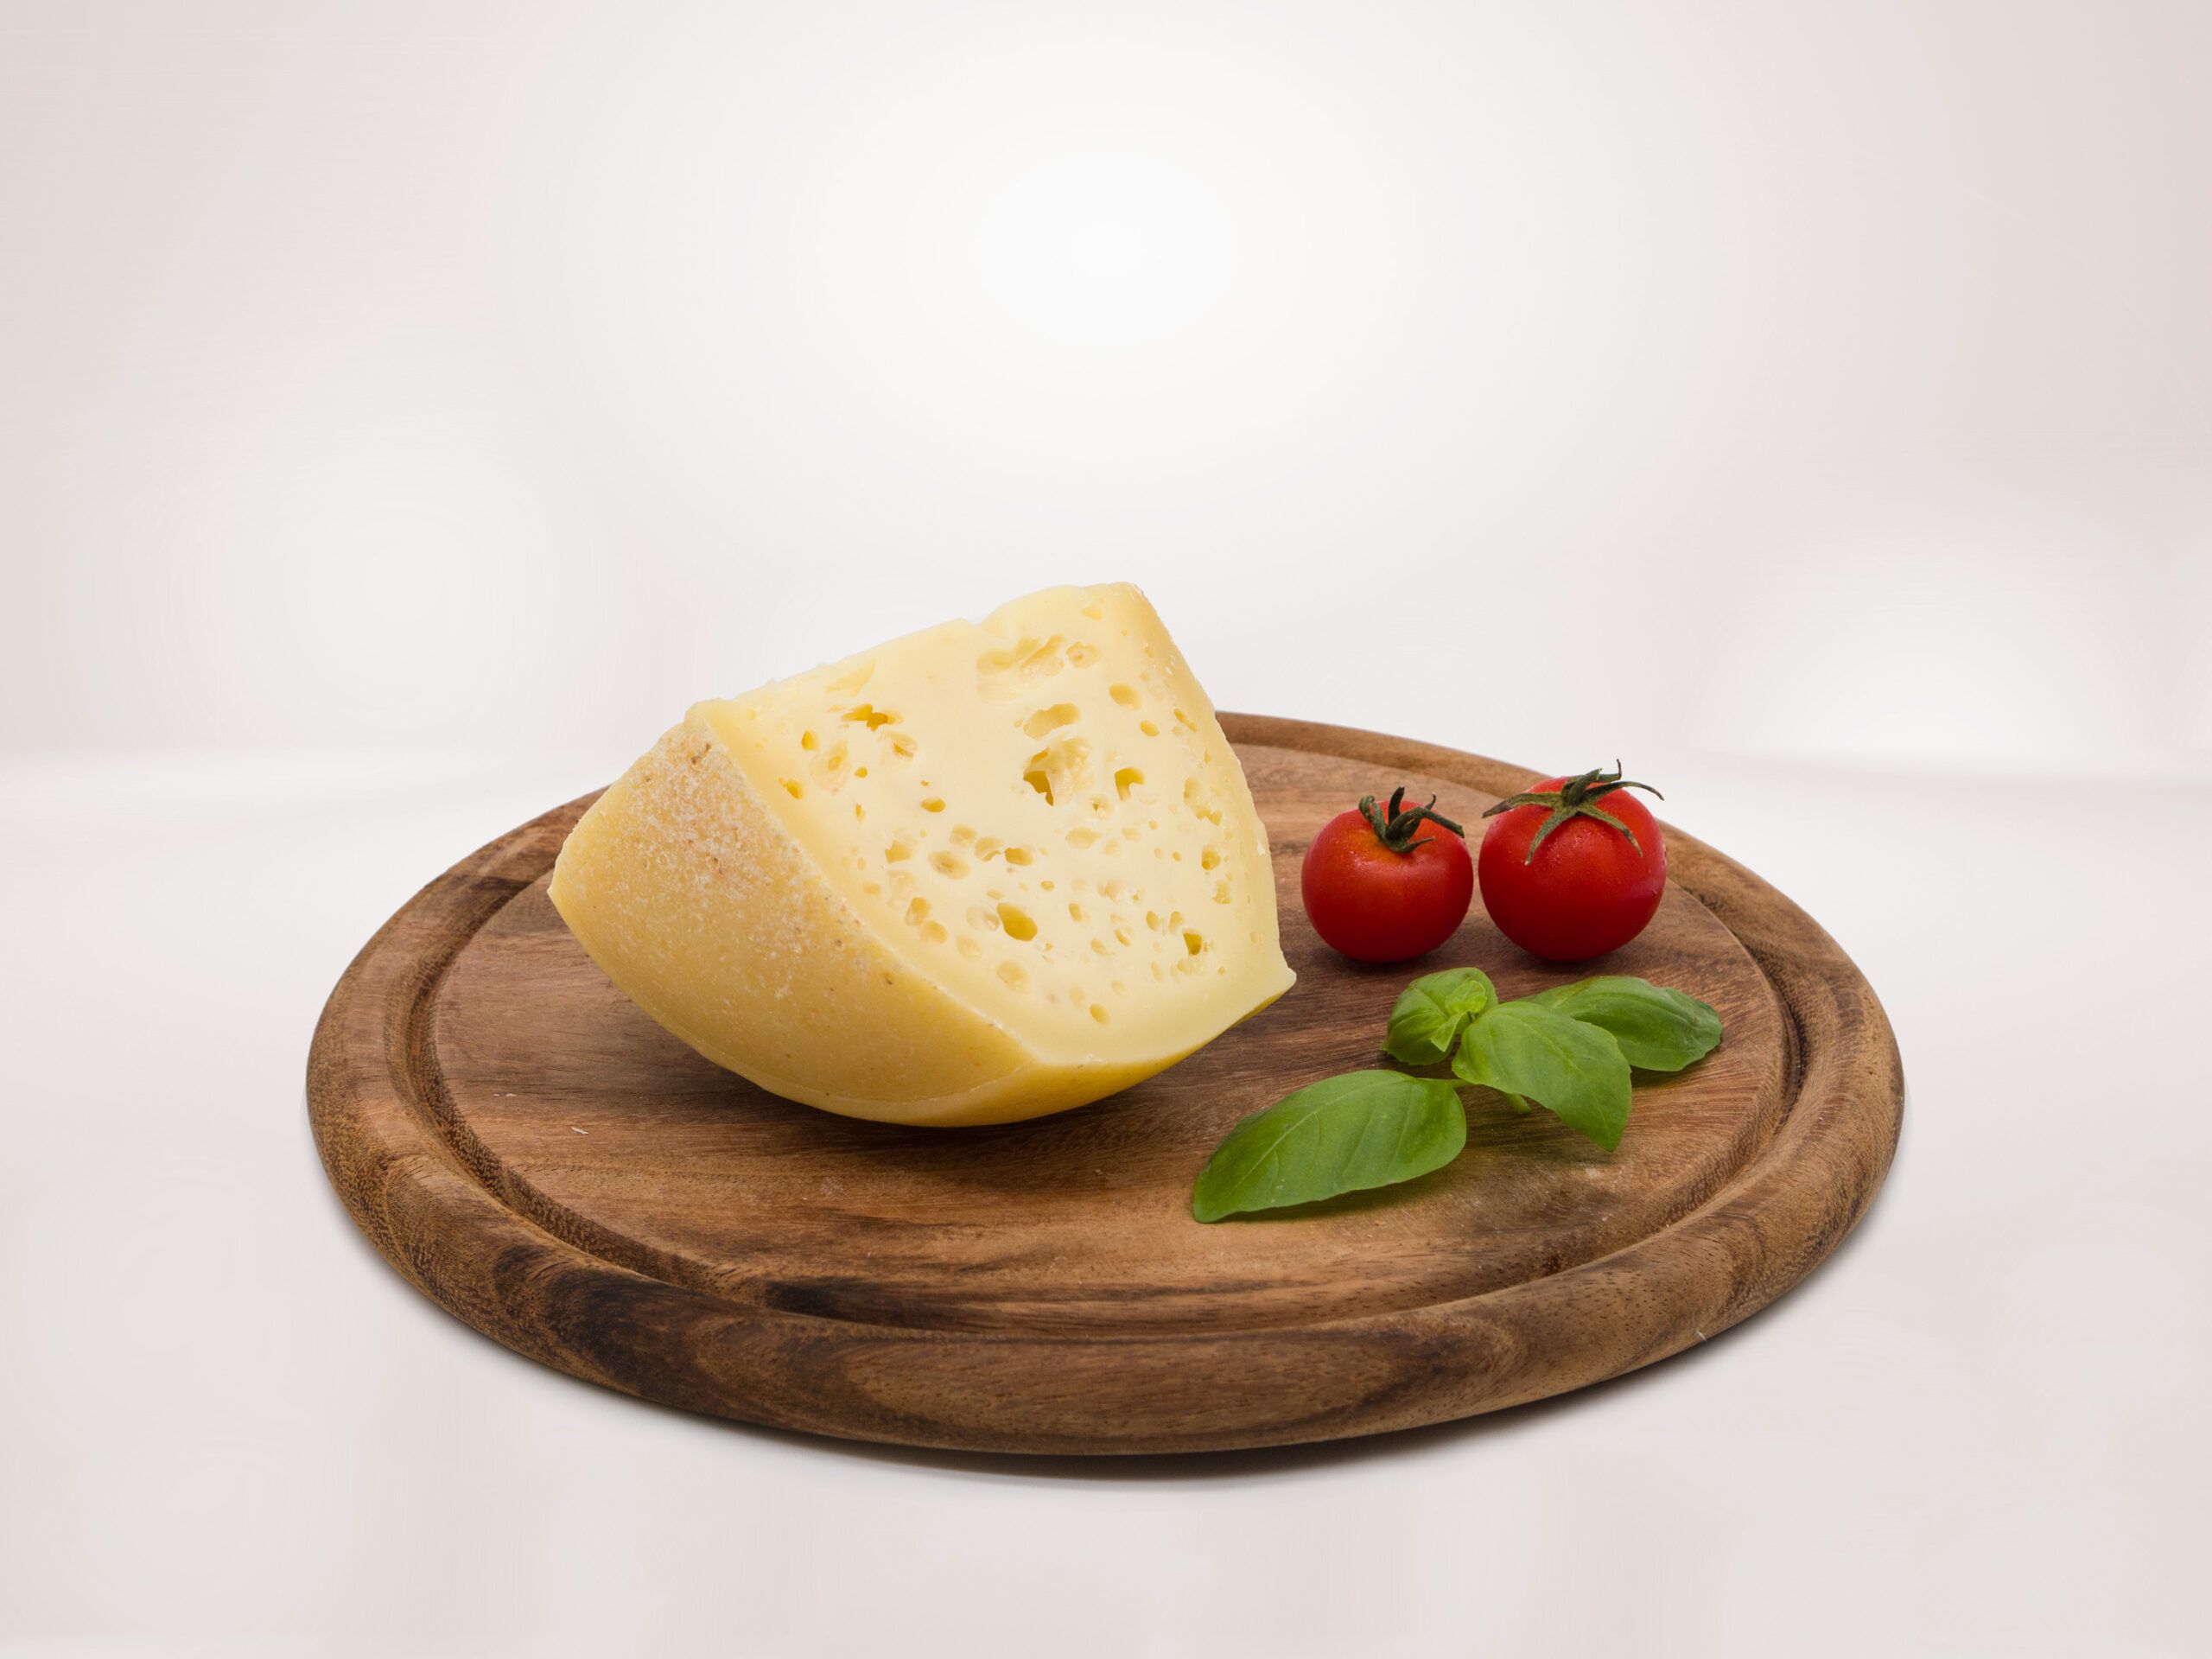 formaggio fresco scaled f13c767f